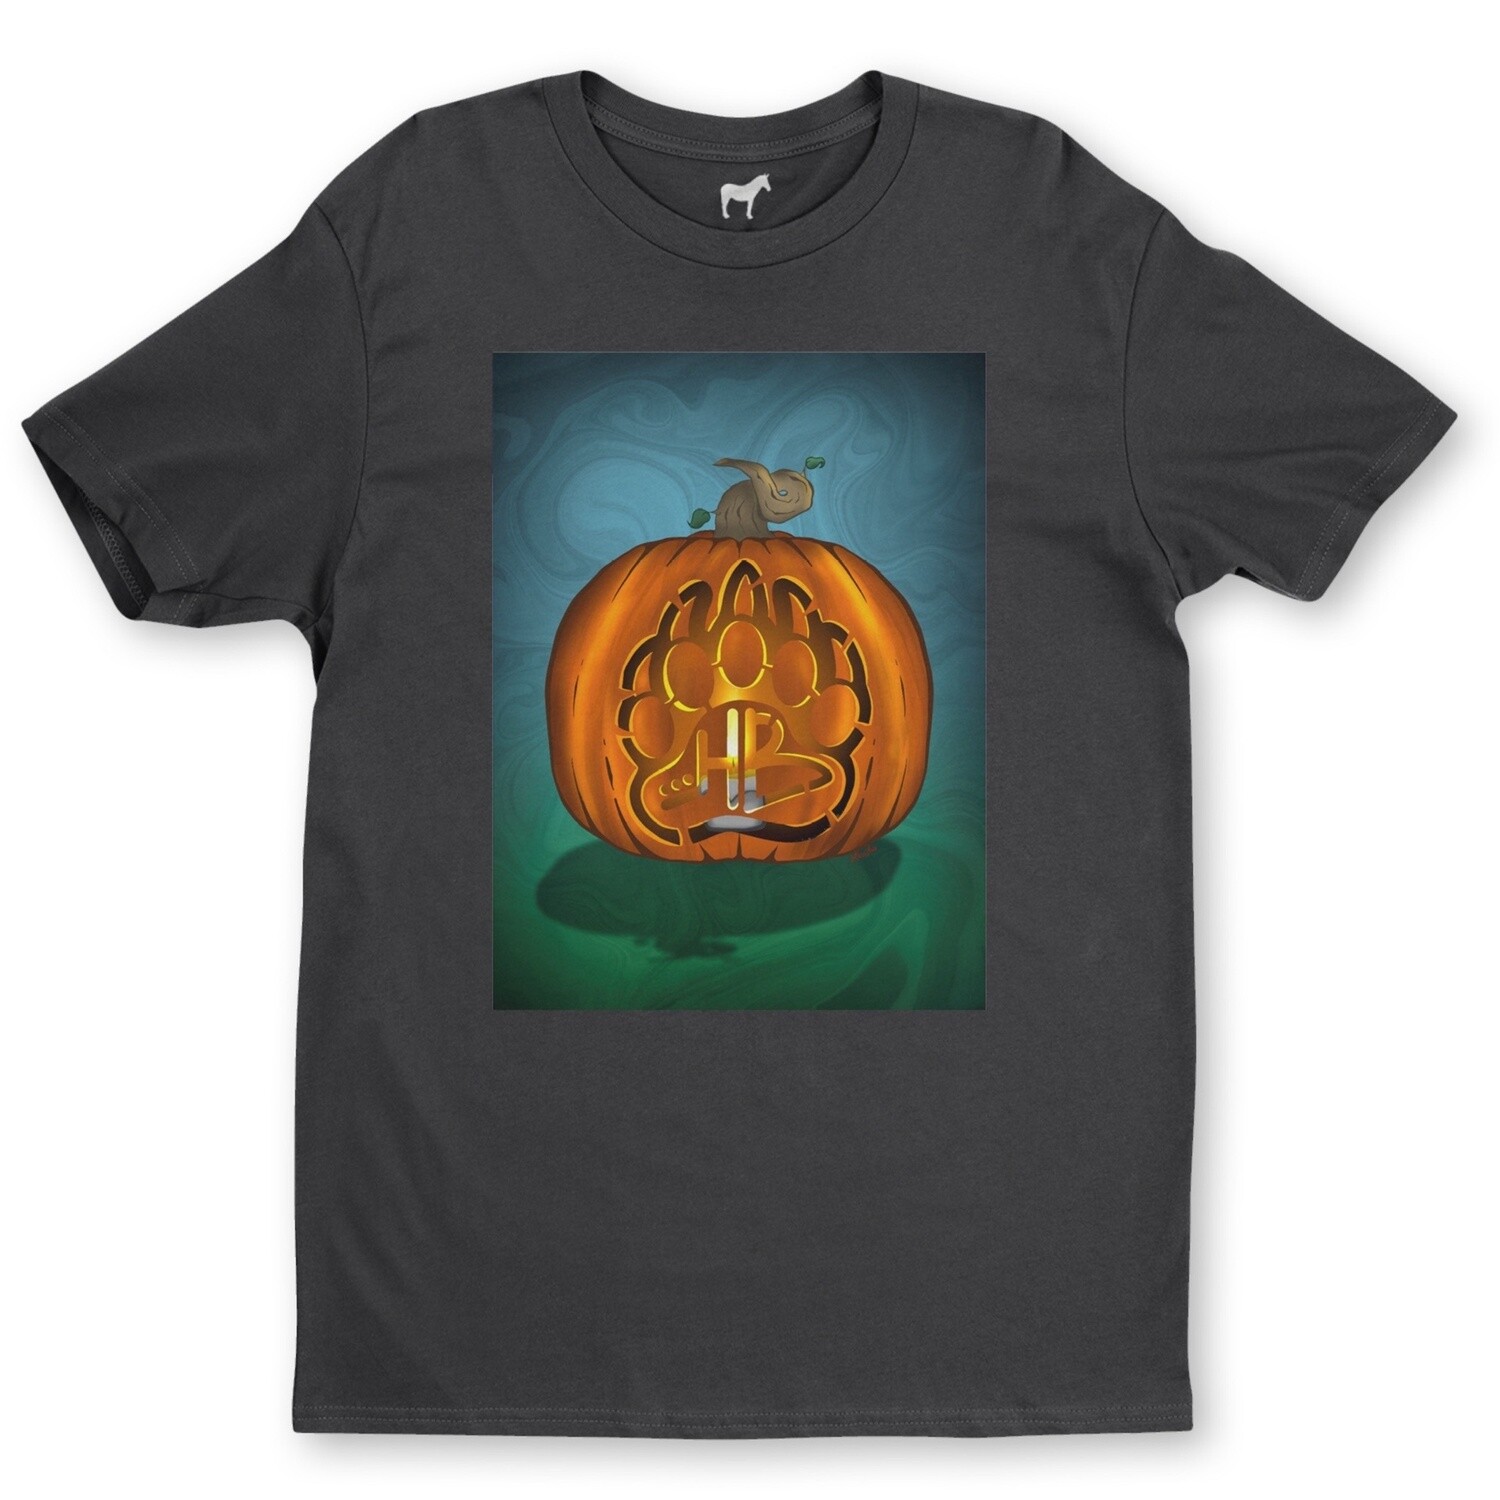 Hazey Bearr® T-shirt - Jack-o'-lantern Limited Edition